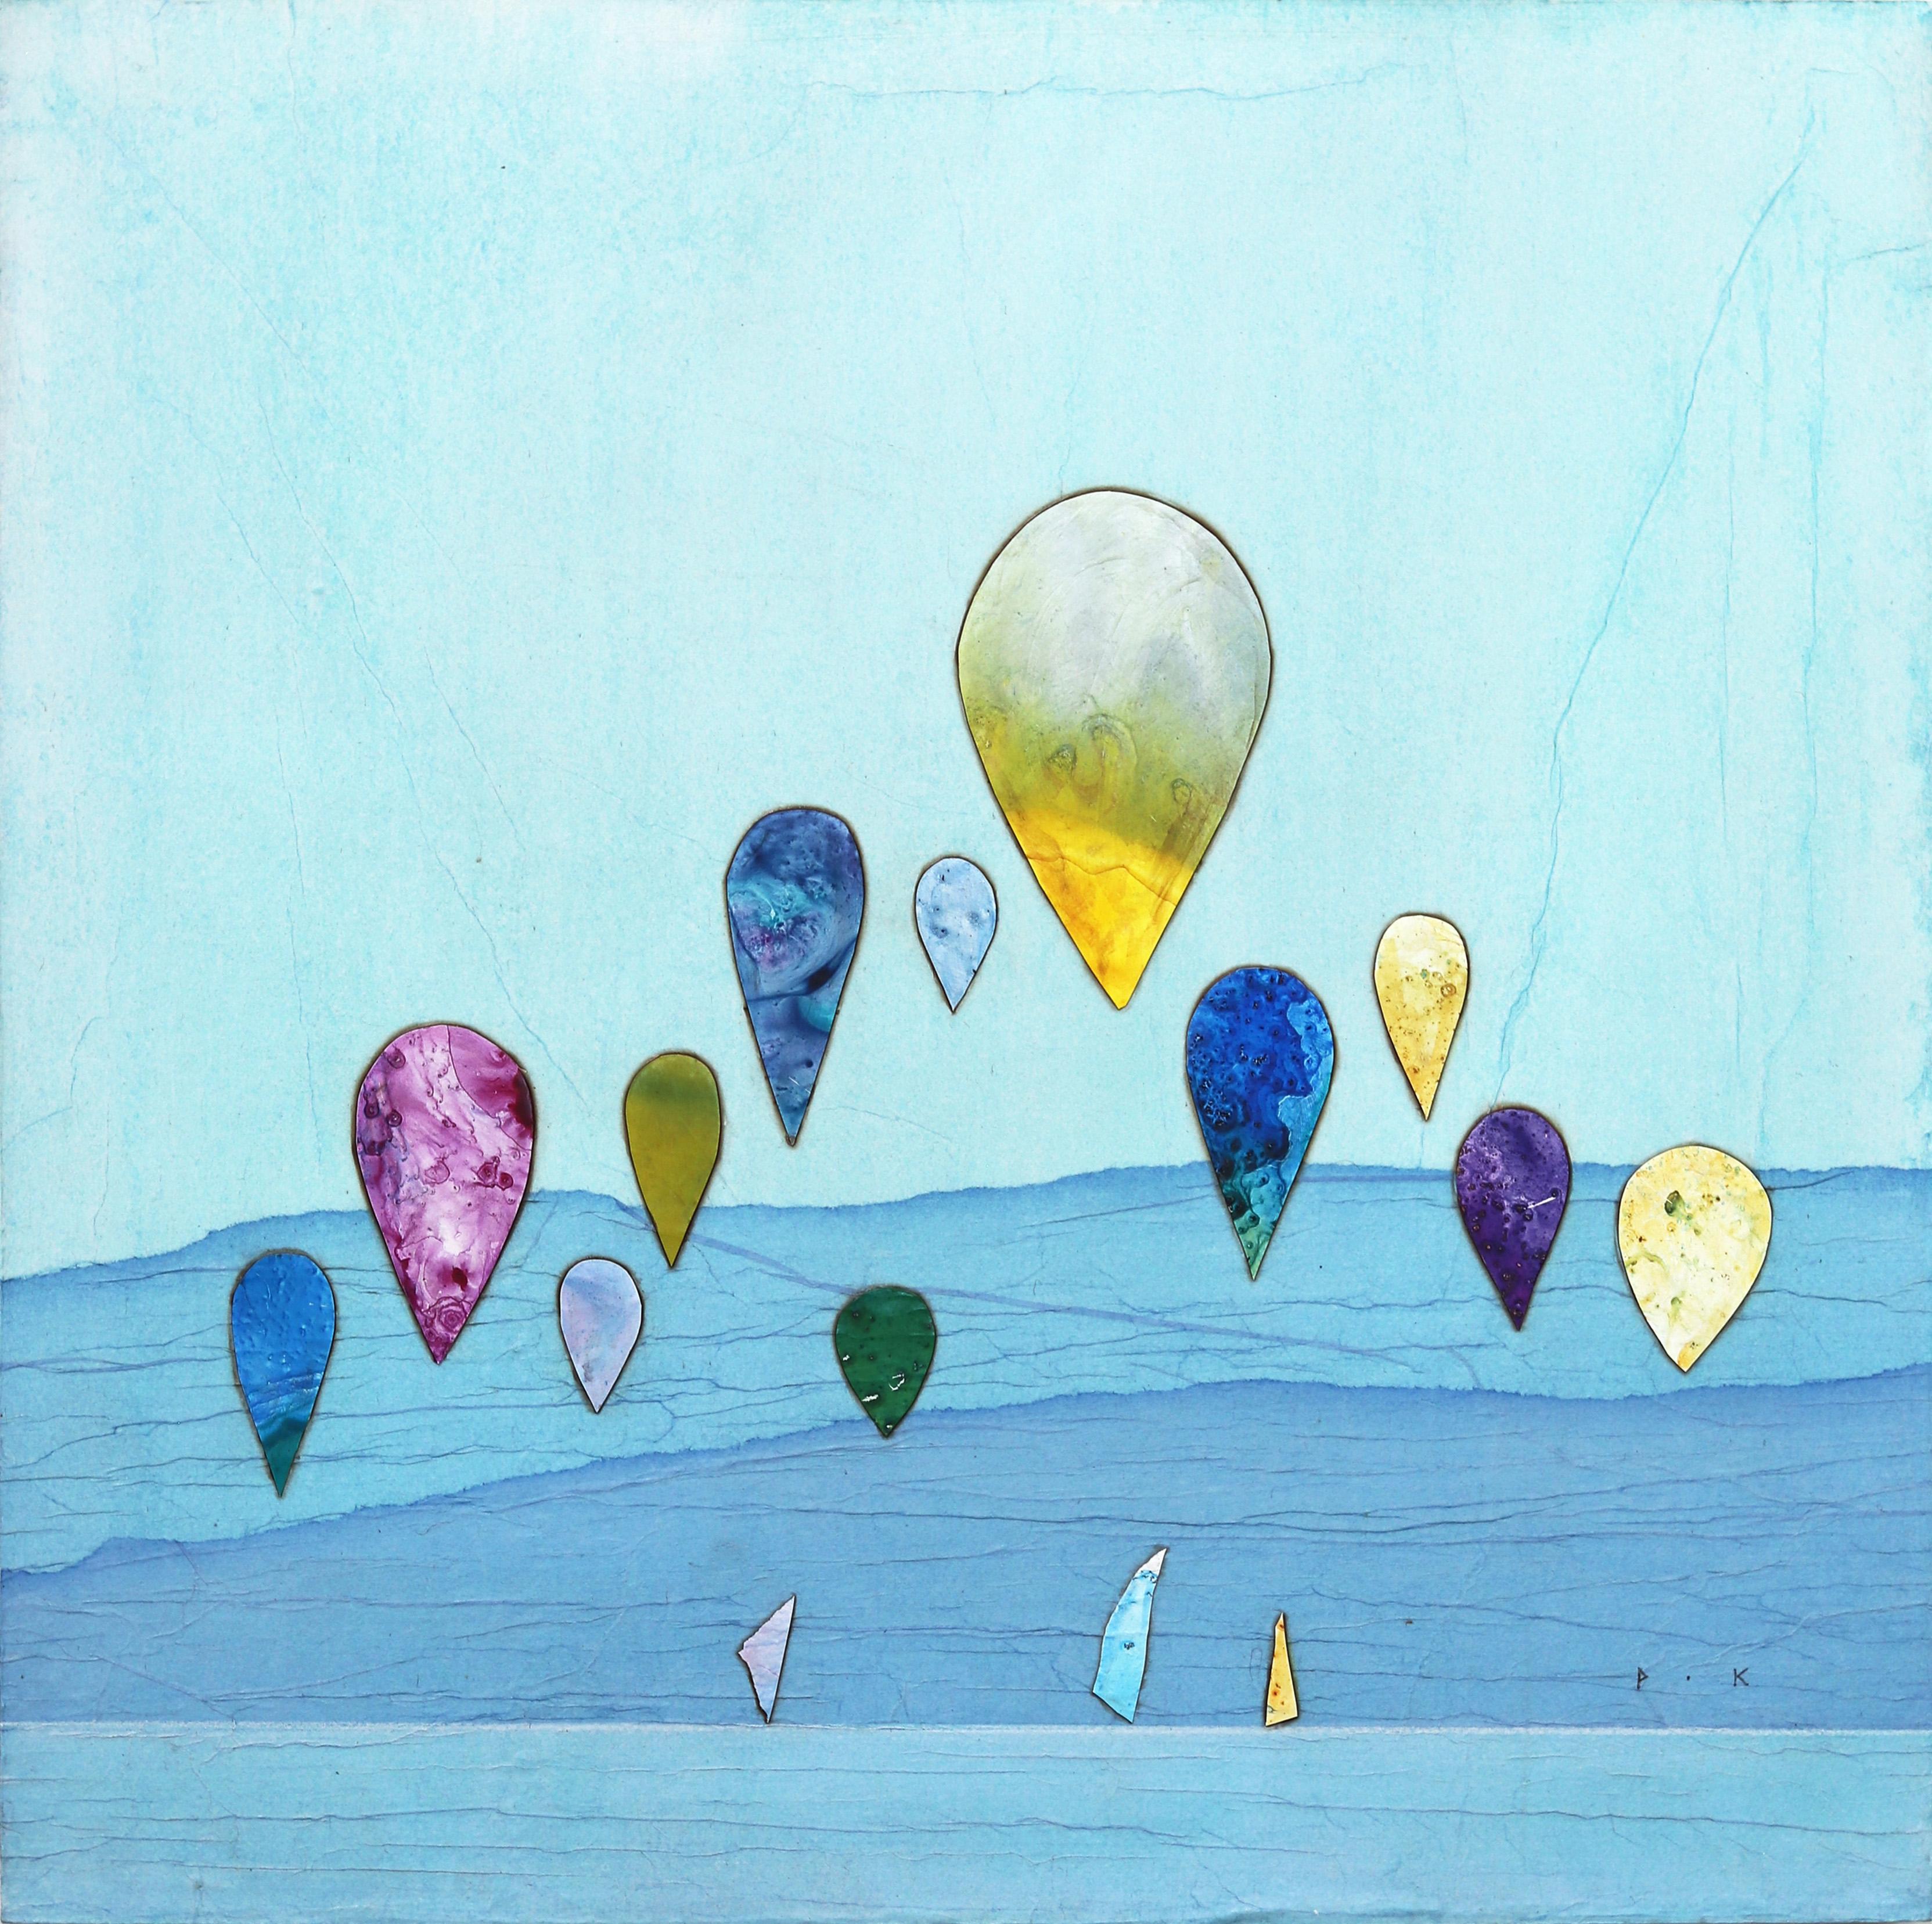 Our Hangout II - Original Abstract Hot Air Balloon Nostalgic Painting